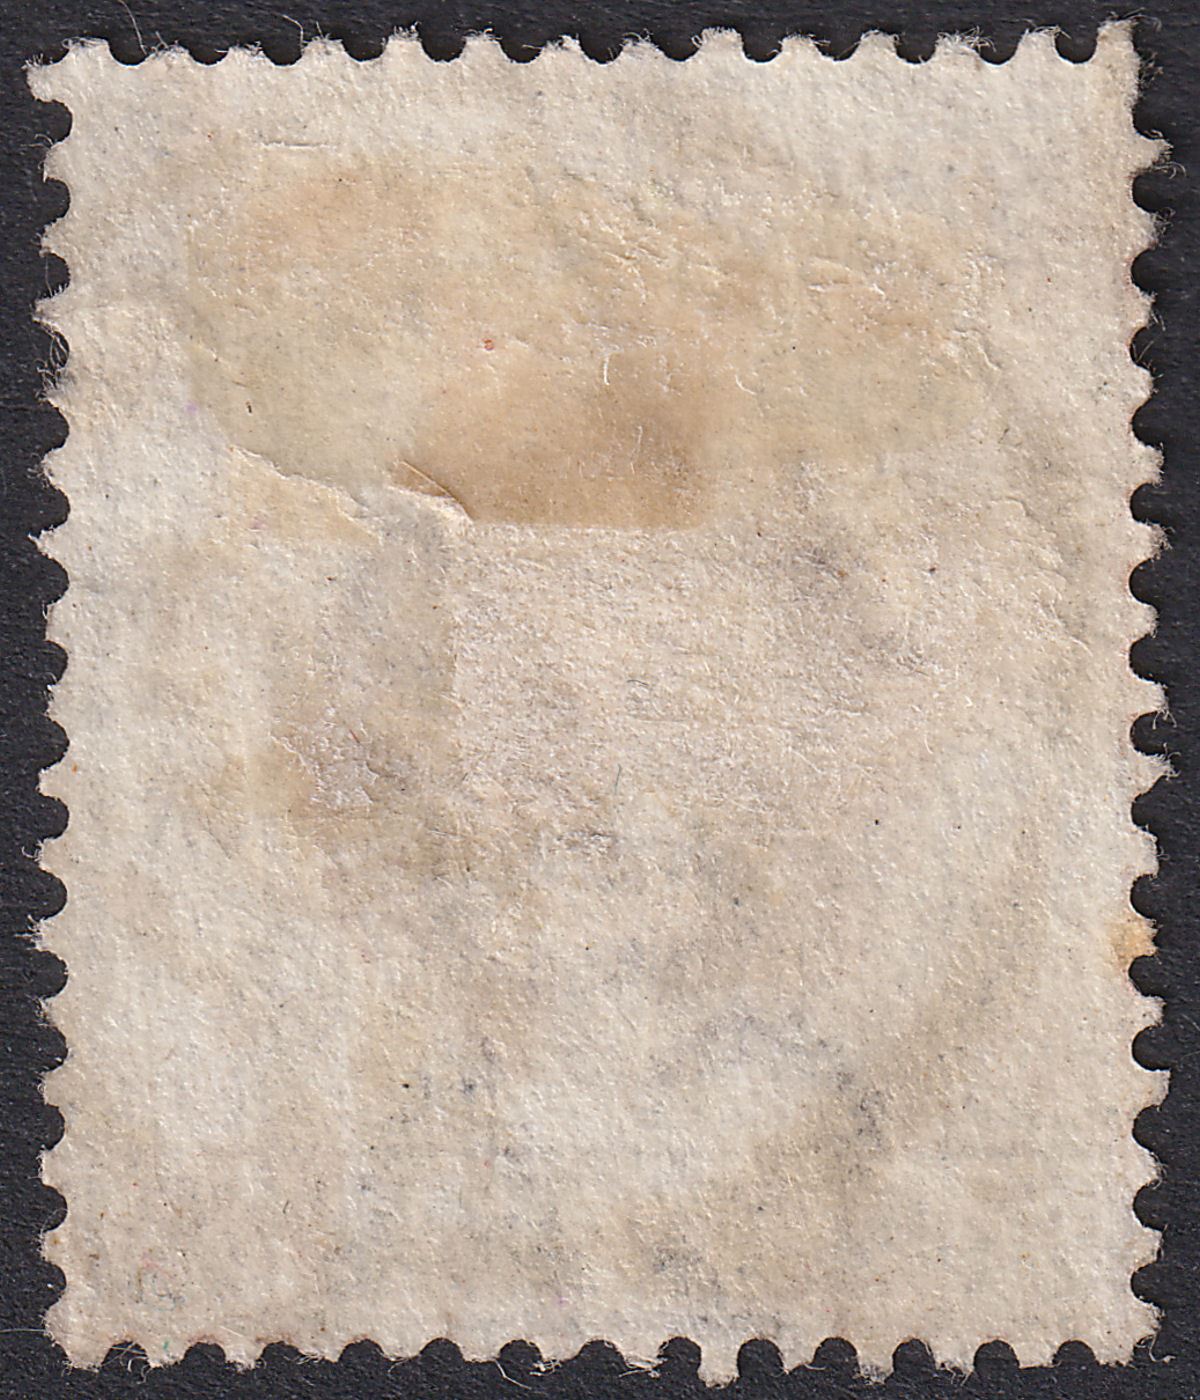 Hong Kong 1905 KEVII 1c Used HOIHOW Postmark Webb Type Fiii SG Z588 cat £32